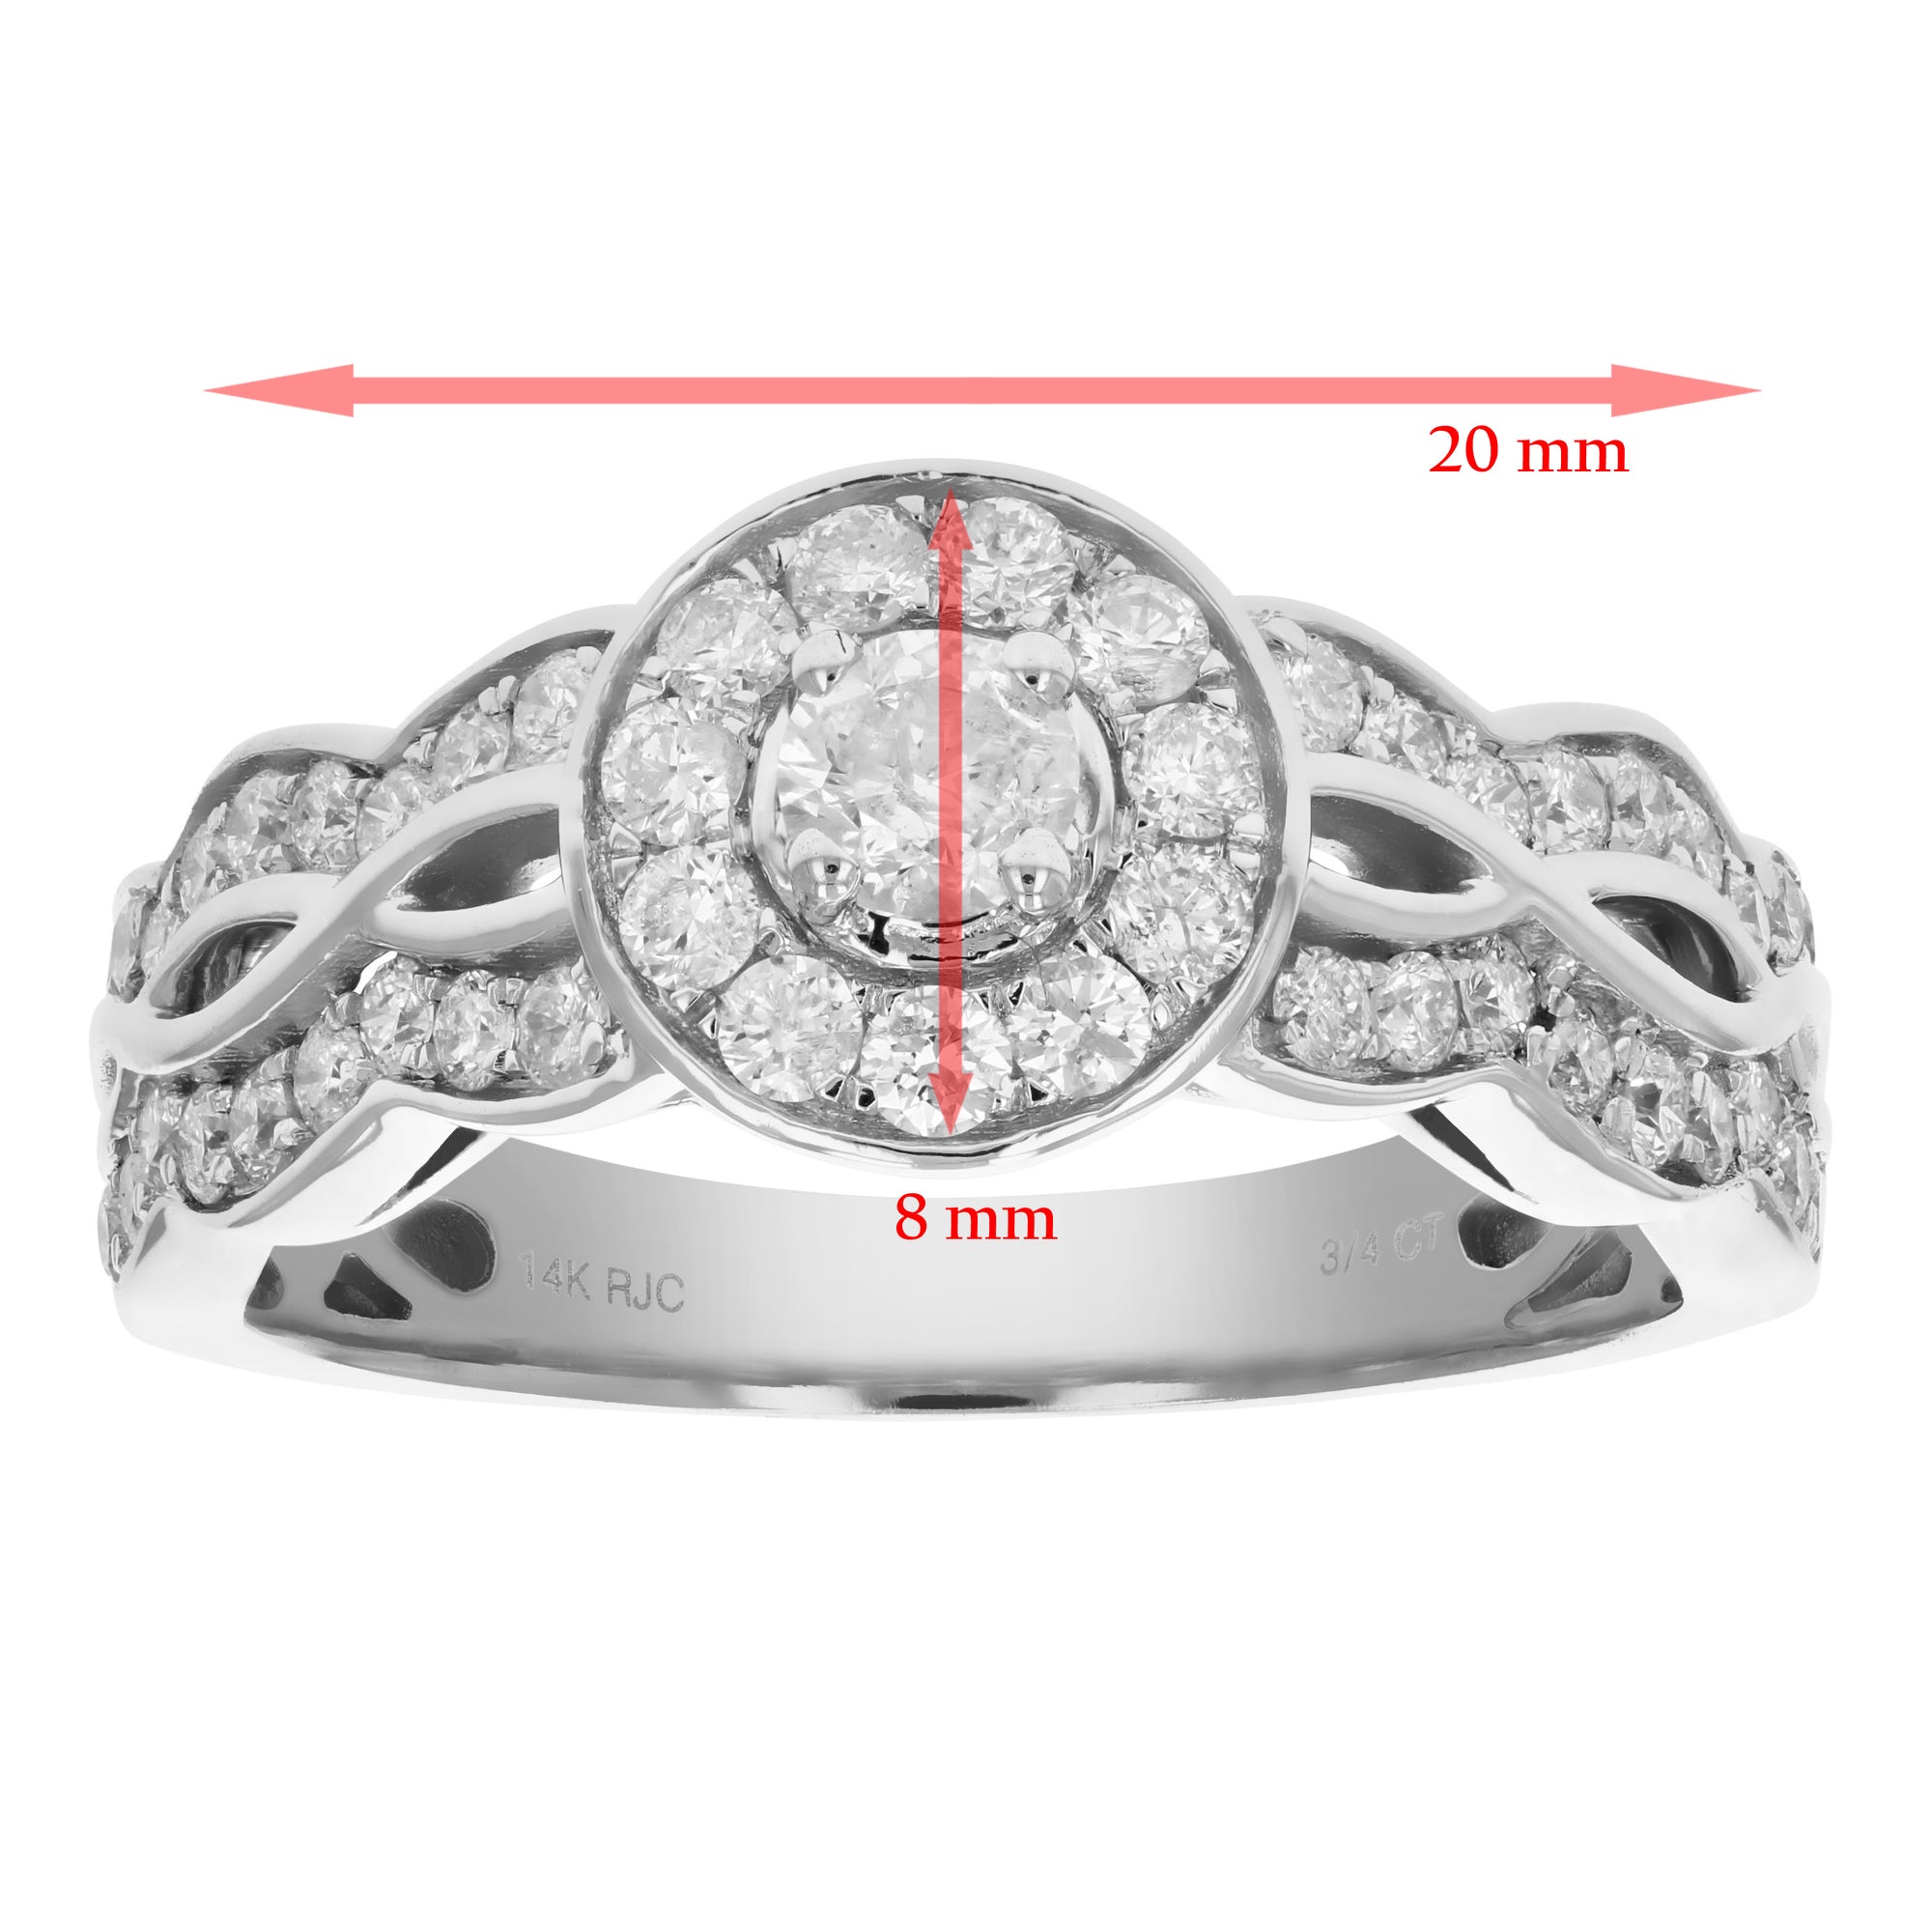 3/4 cttw Diamond Engagement Ring 14K White Gold Halo Prong Set Bridal Style